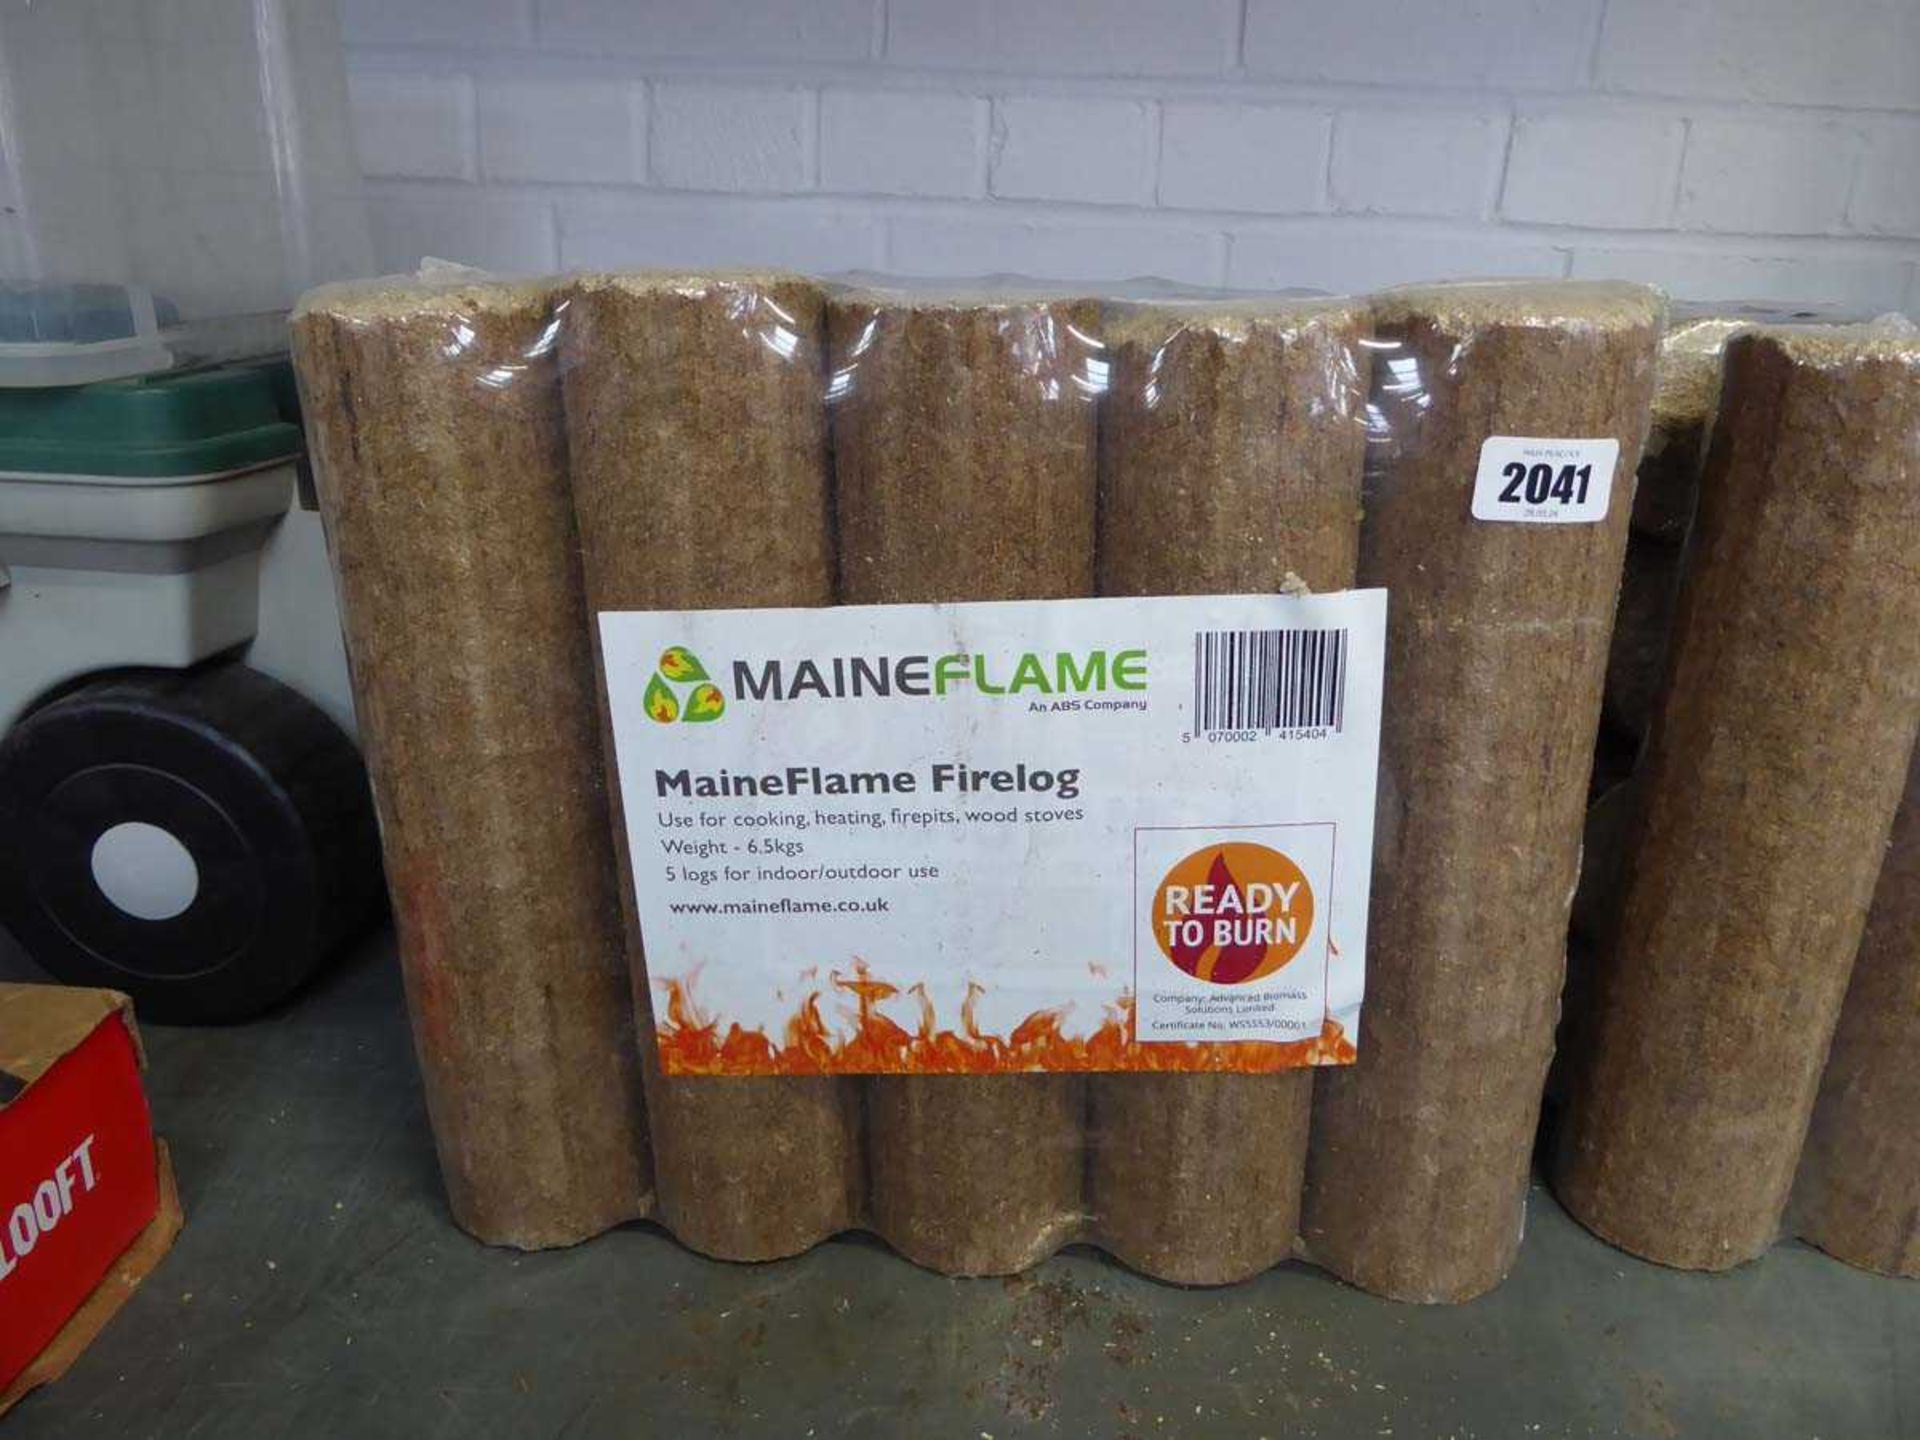 5 packs of 5 MaineFlame fire logs